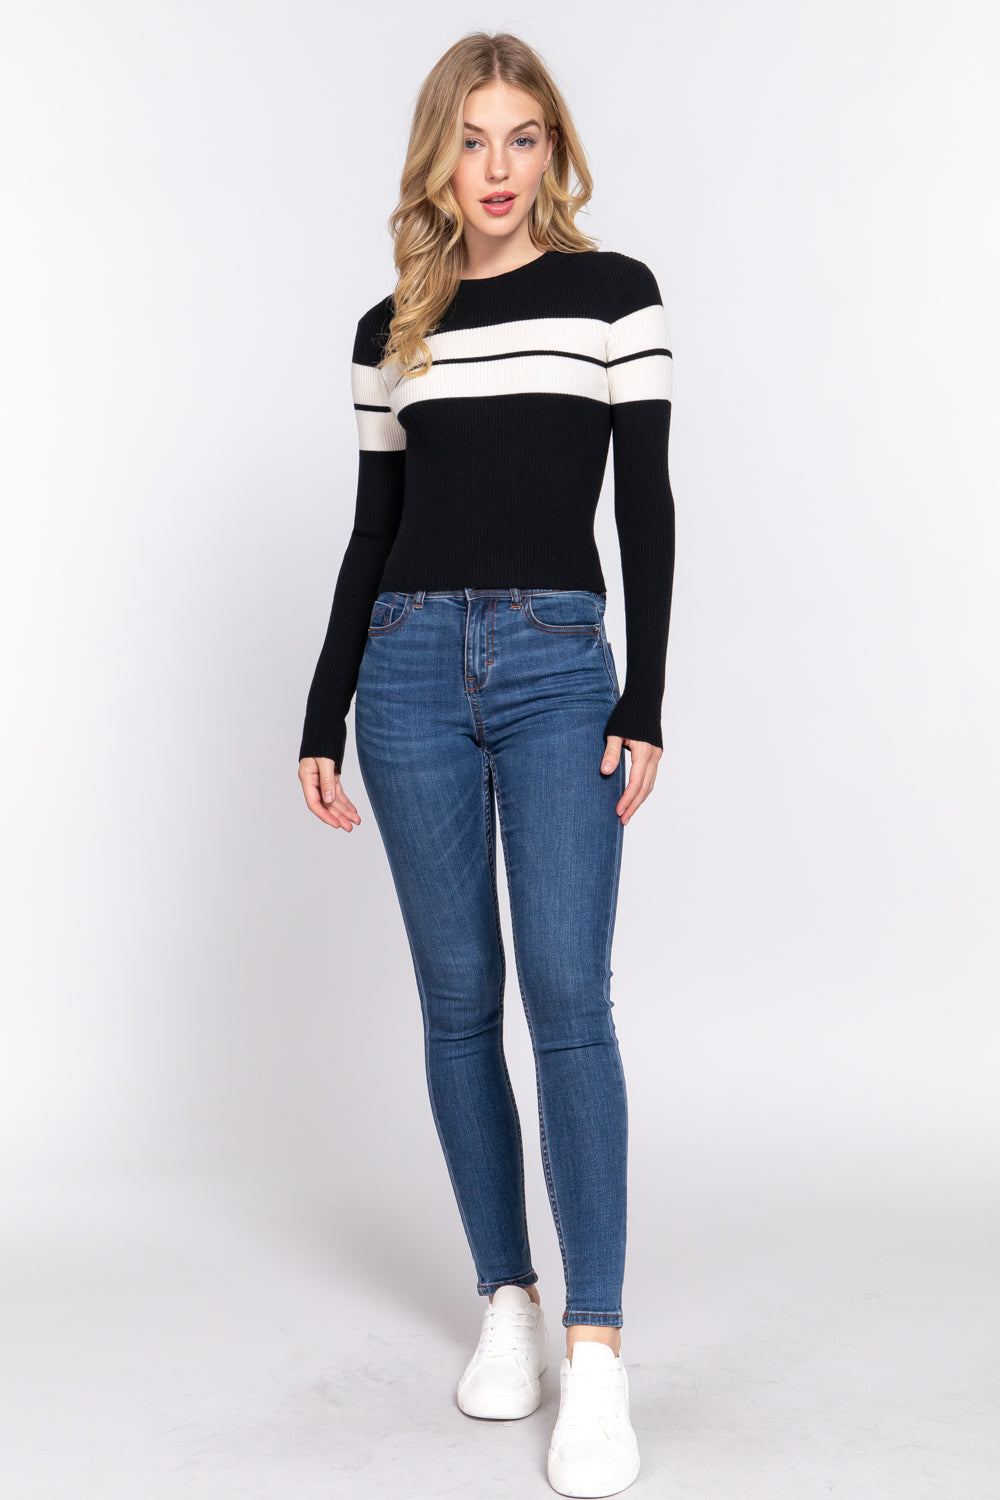 Stripe Rib Long Sleeve Sweater